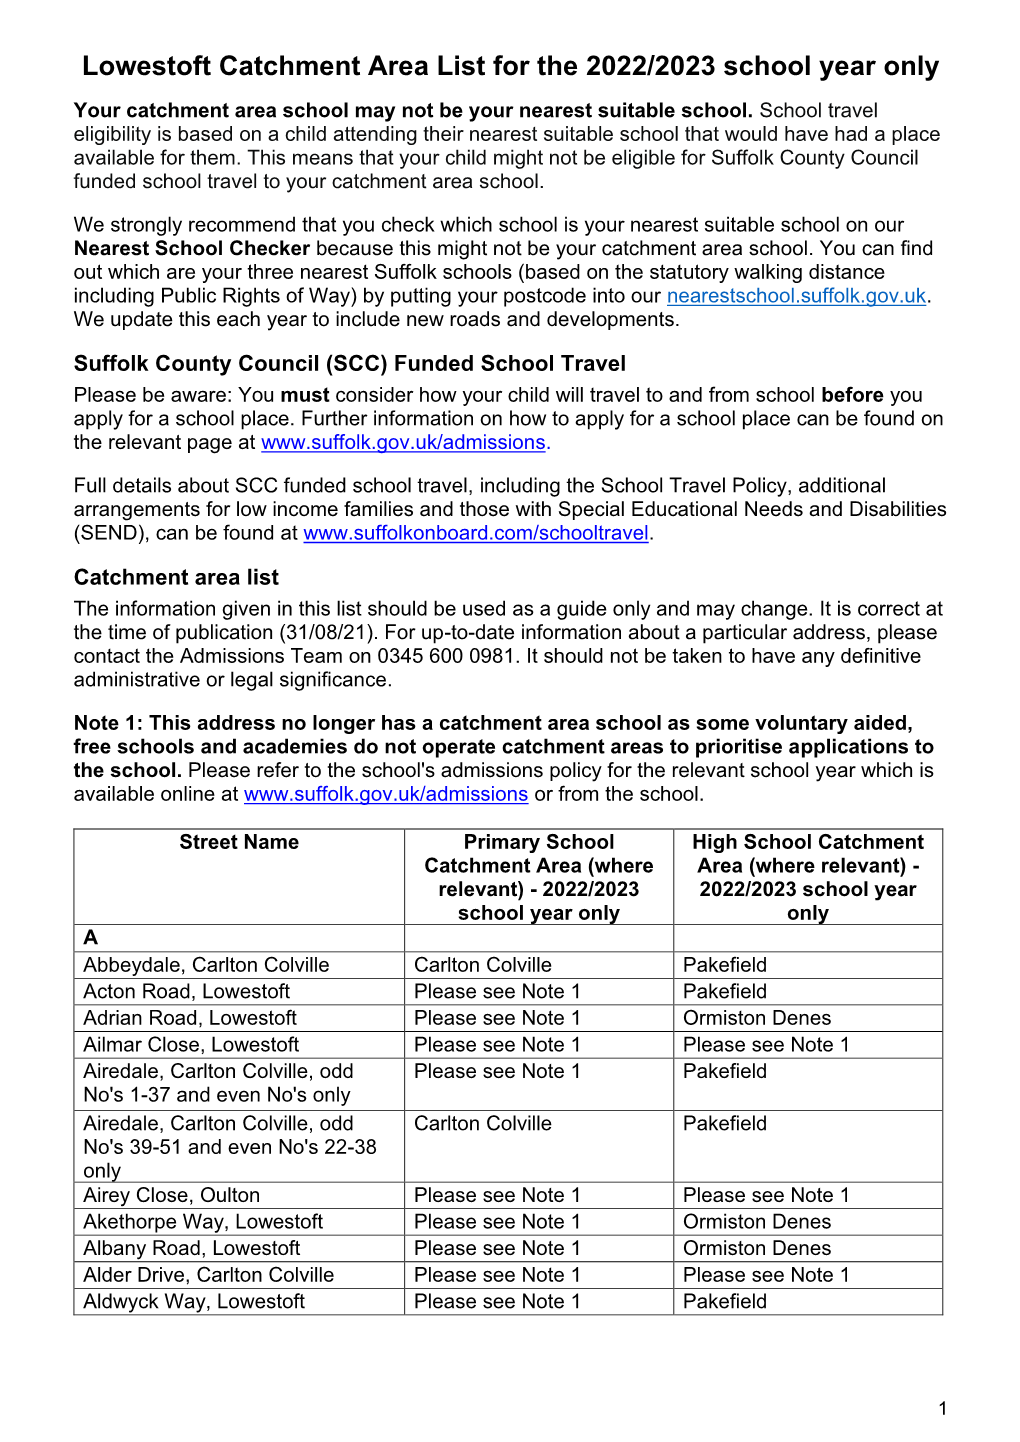 Lowestoft Catchment Area List for the 2022/2023 School Year Only Your Catchment Area School May Not Be Your Nearest Suitable School